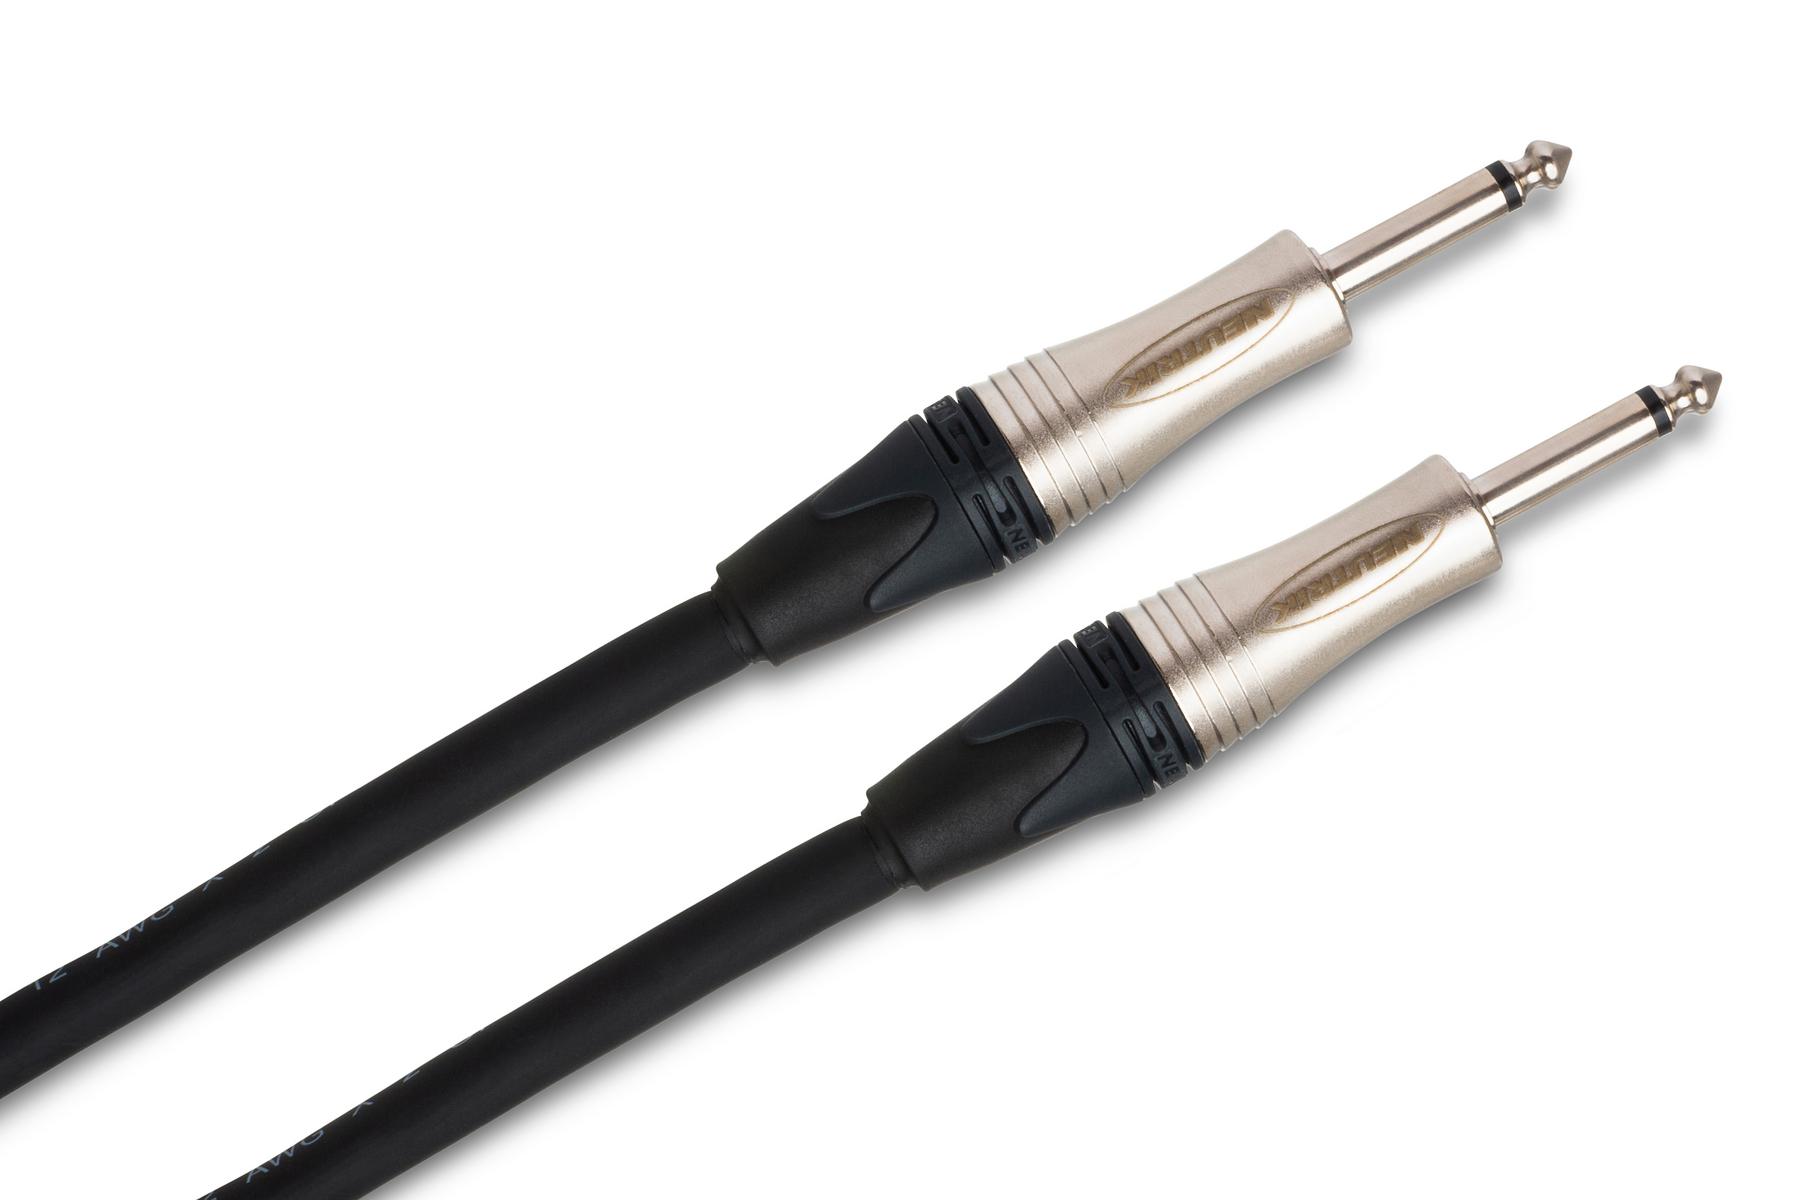 Neutrik speakON to Same - Edge Speaker Cable